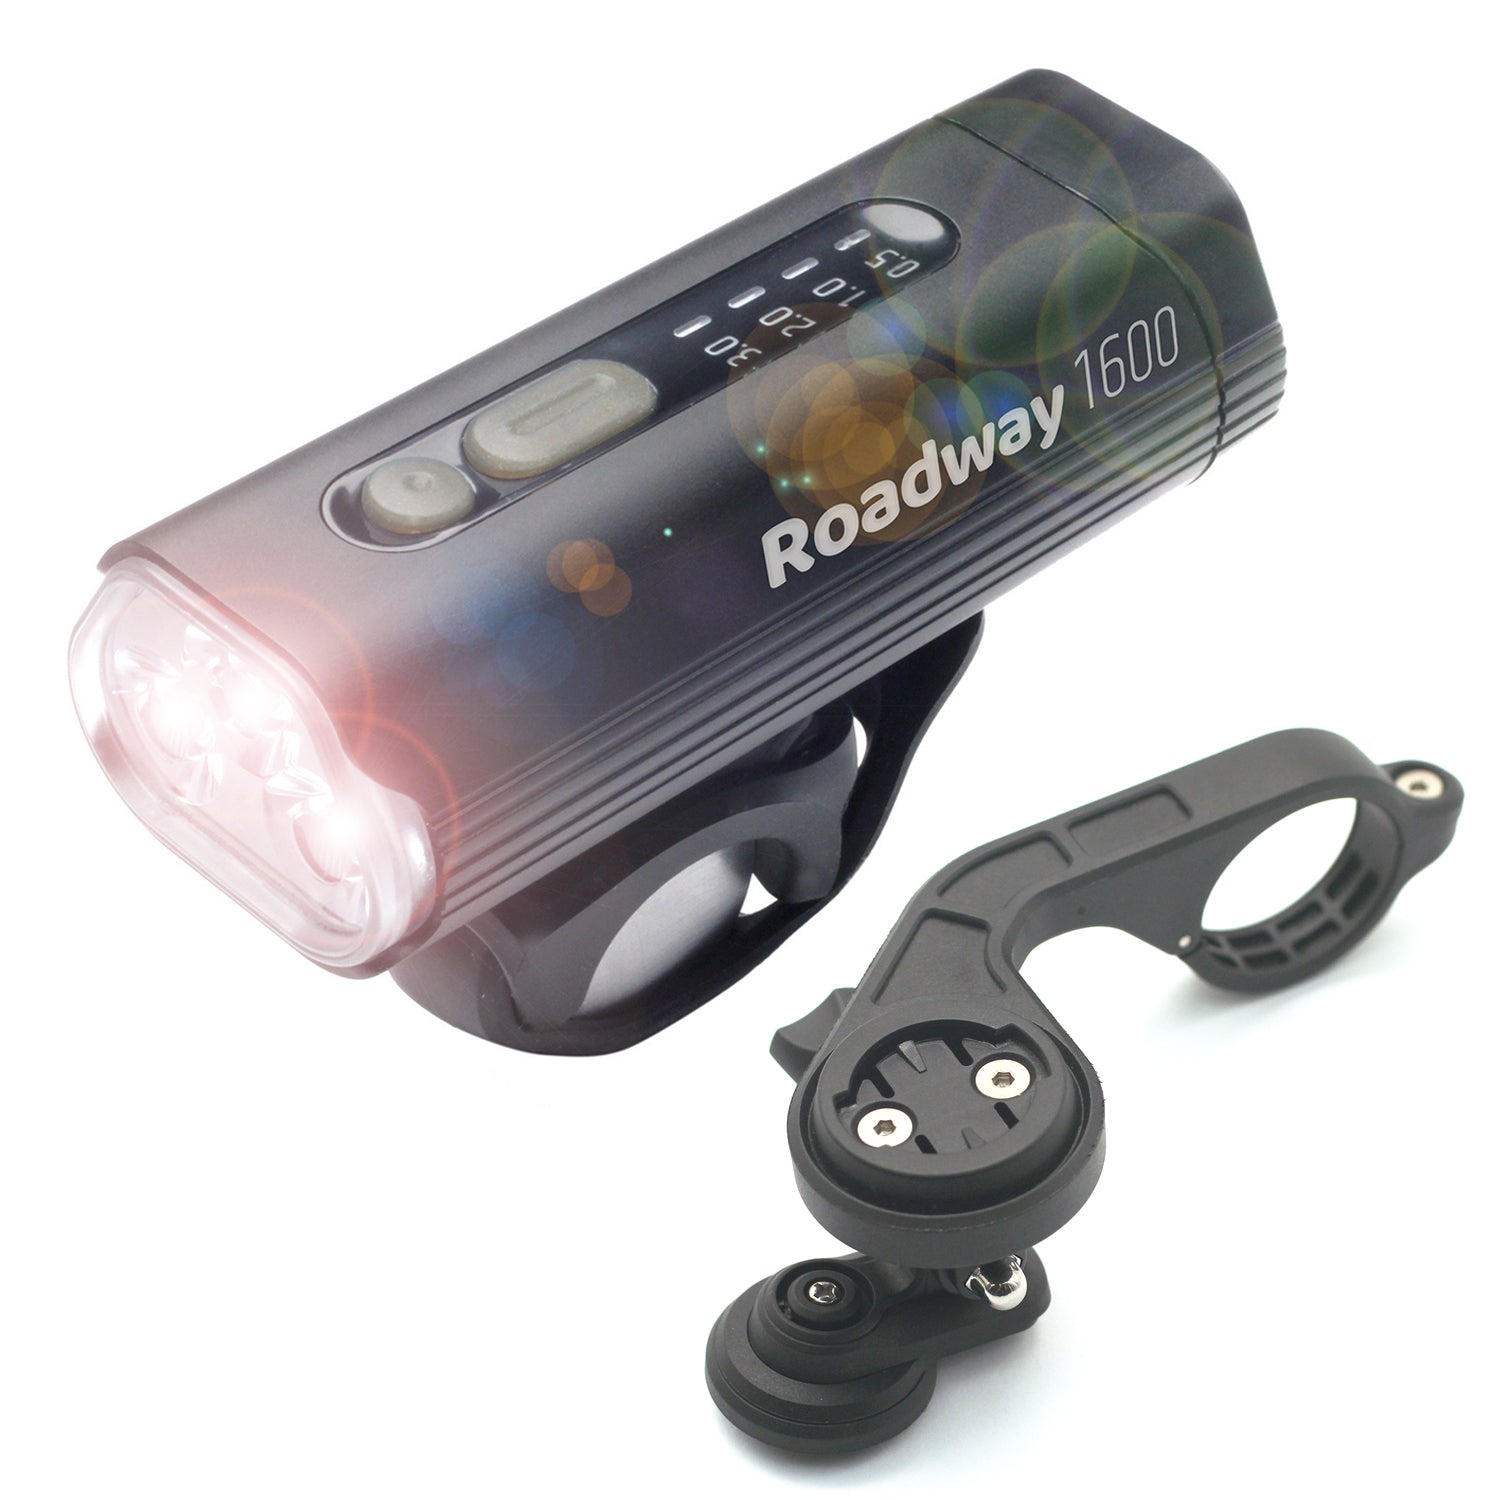 Roadway 1600 - 續航預報單車前燈 Powerful USB Rechargeable Front 